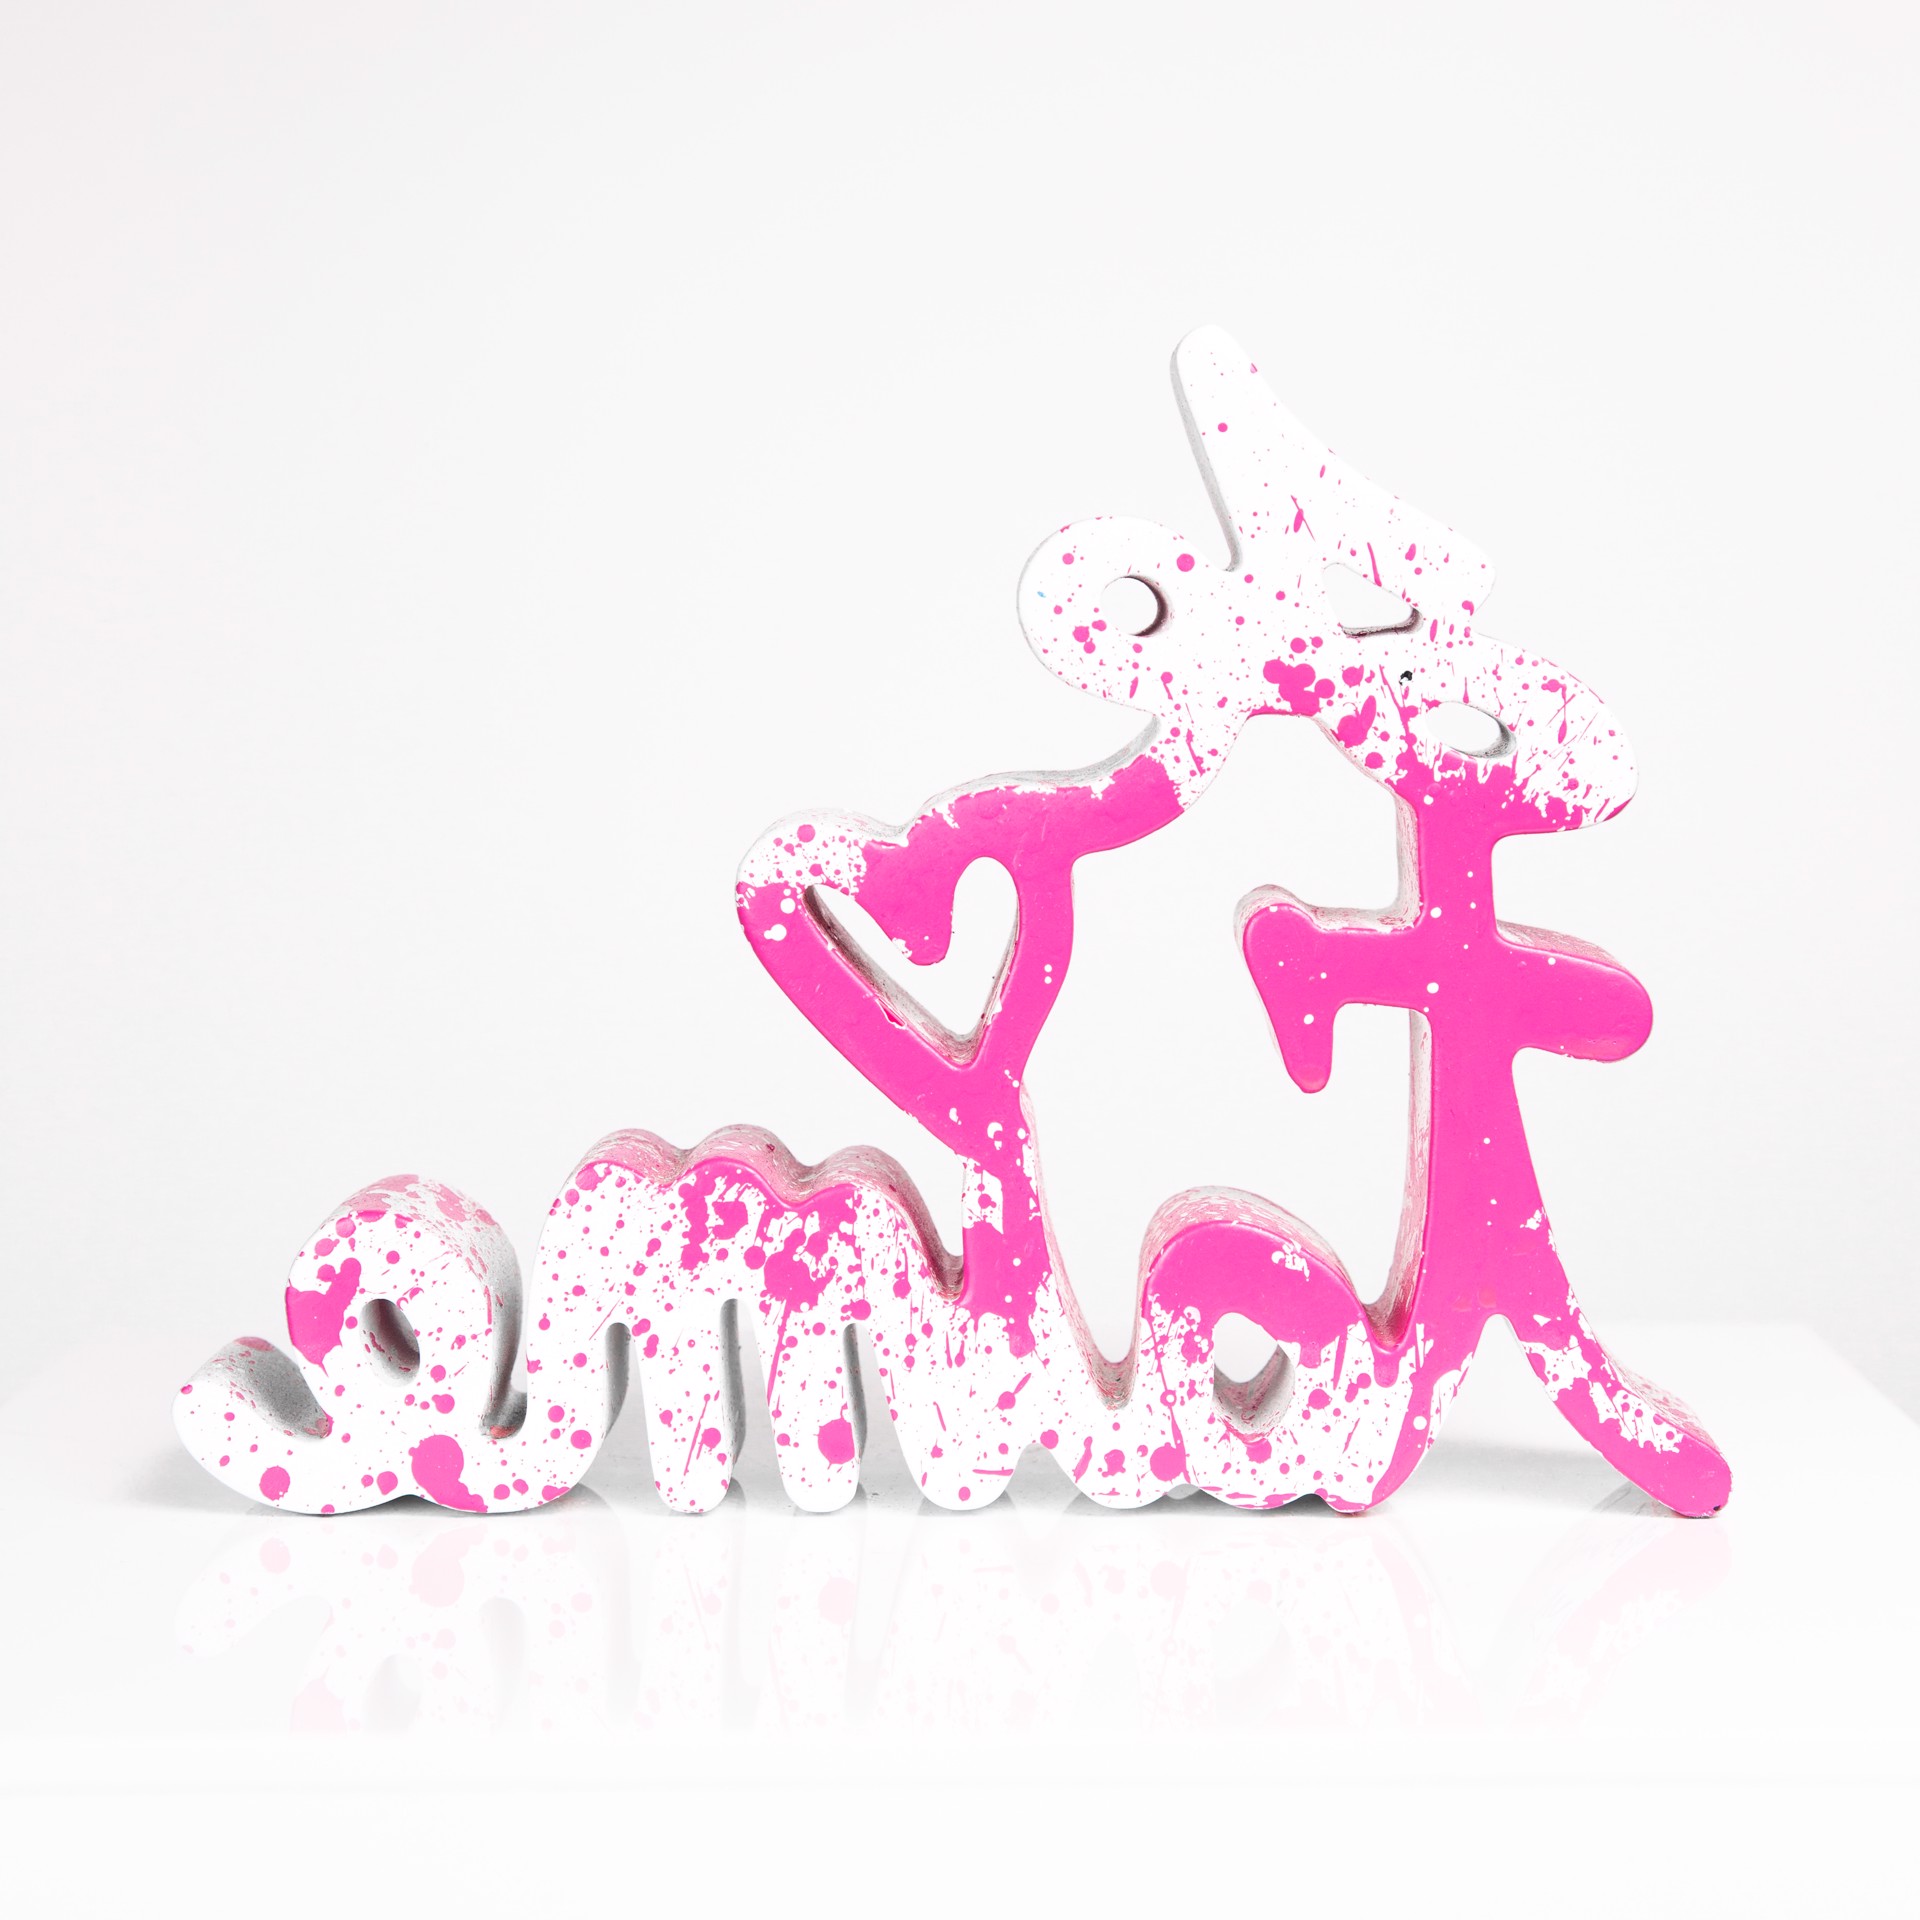 Je t'aime - Pink Splash by Mr.Brainwash